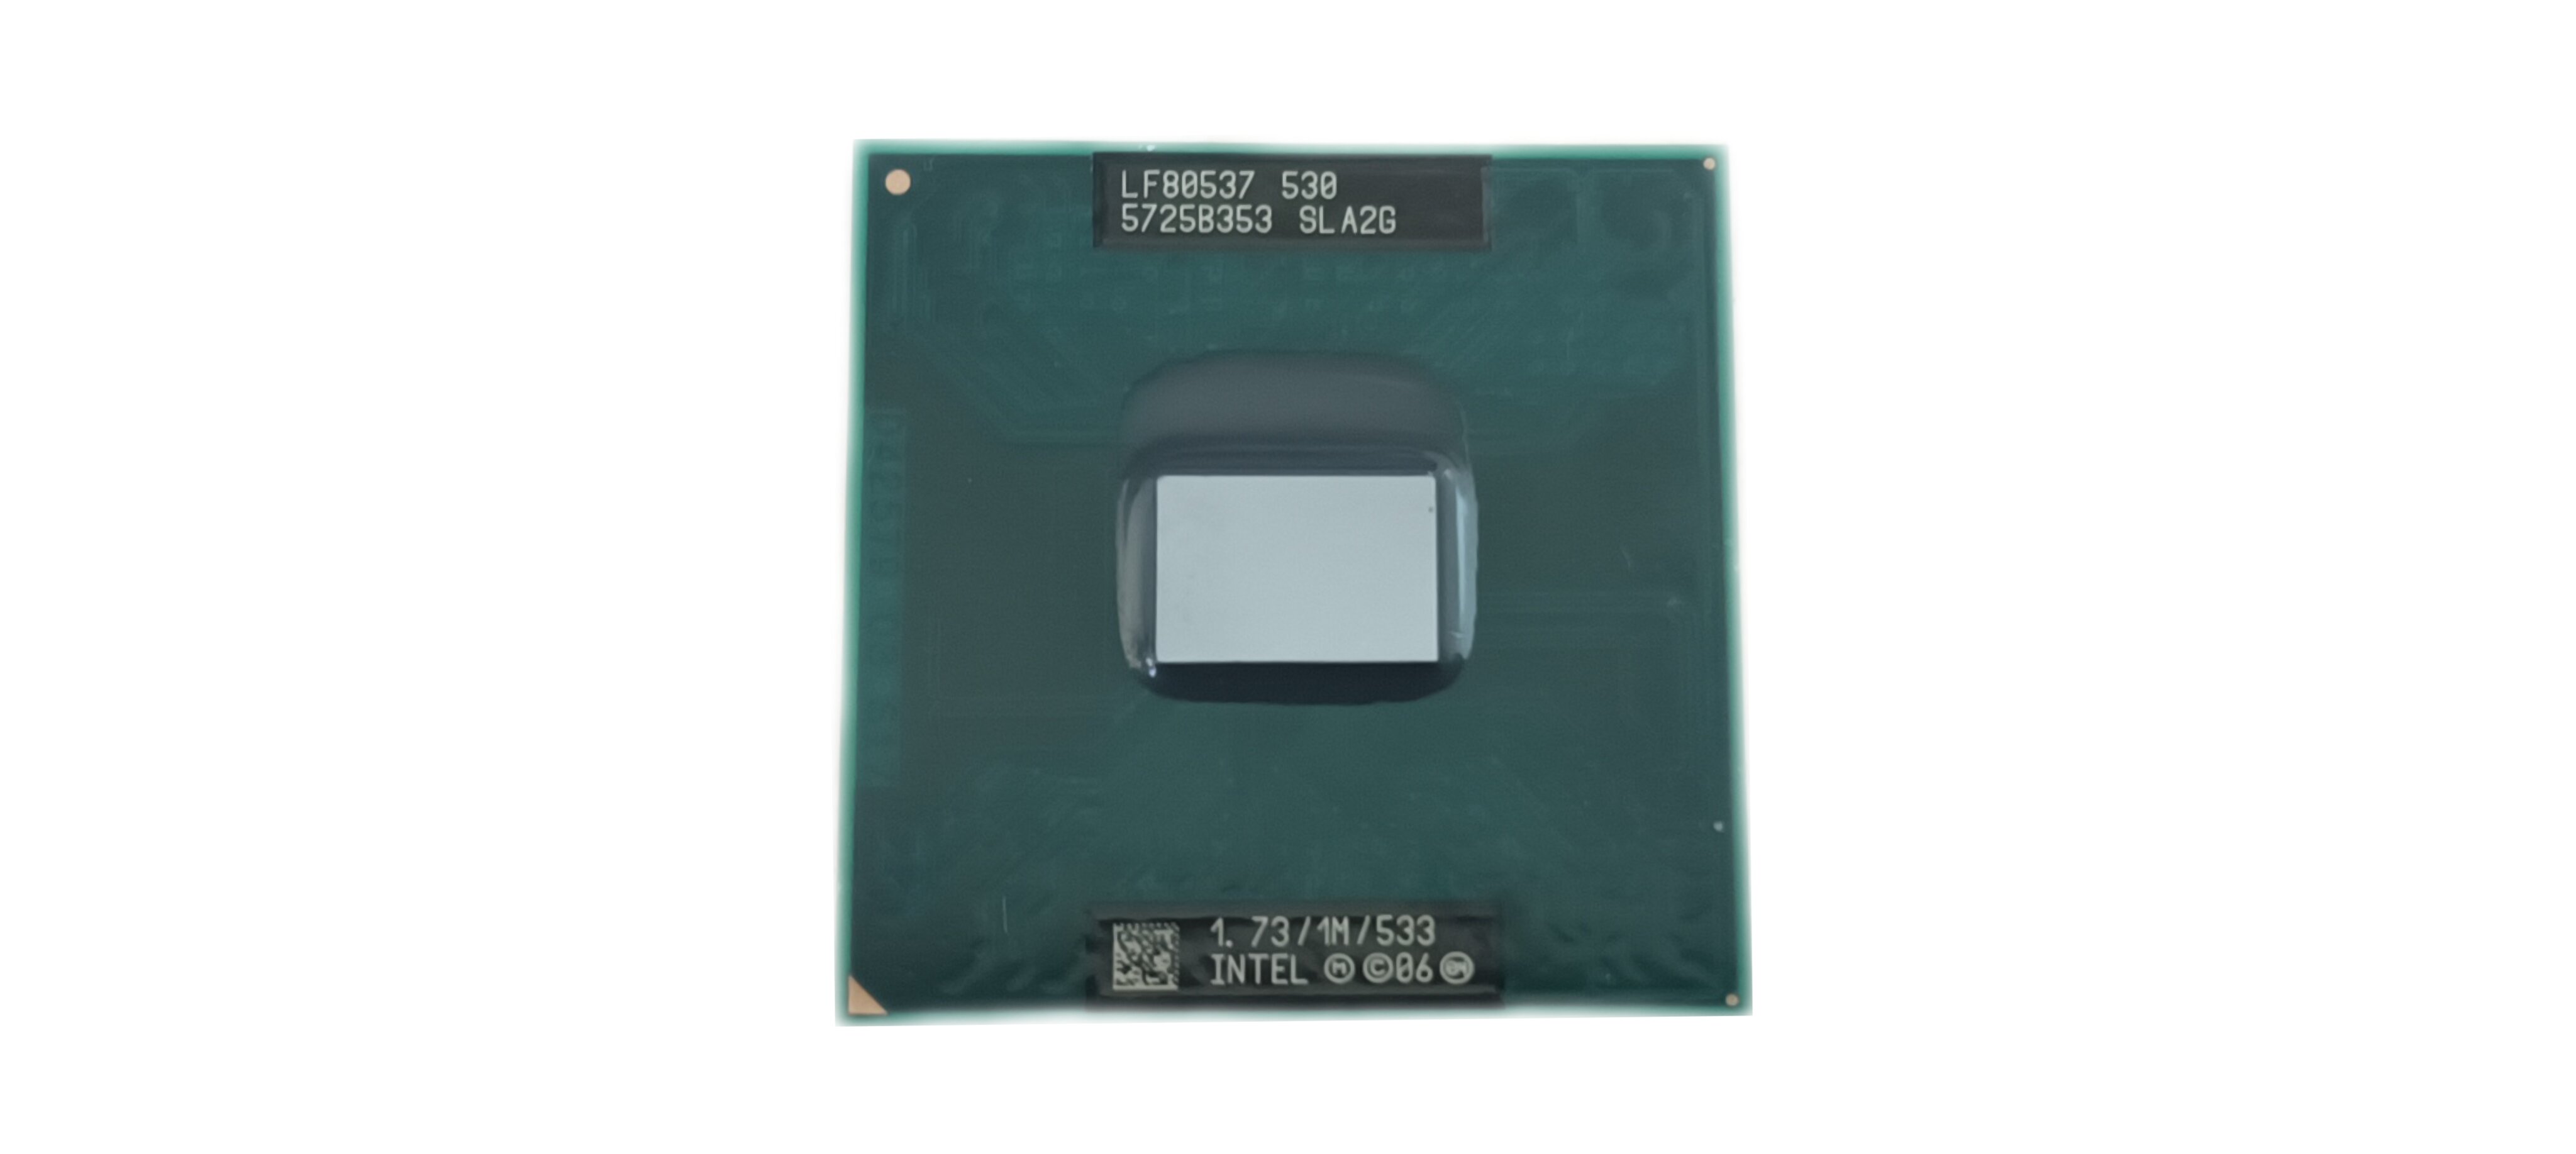 Процессор для ноутбука Intel Celeron M530 [1M Cache 173 GHz 533 MHz]